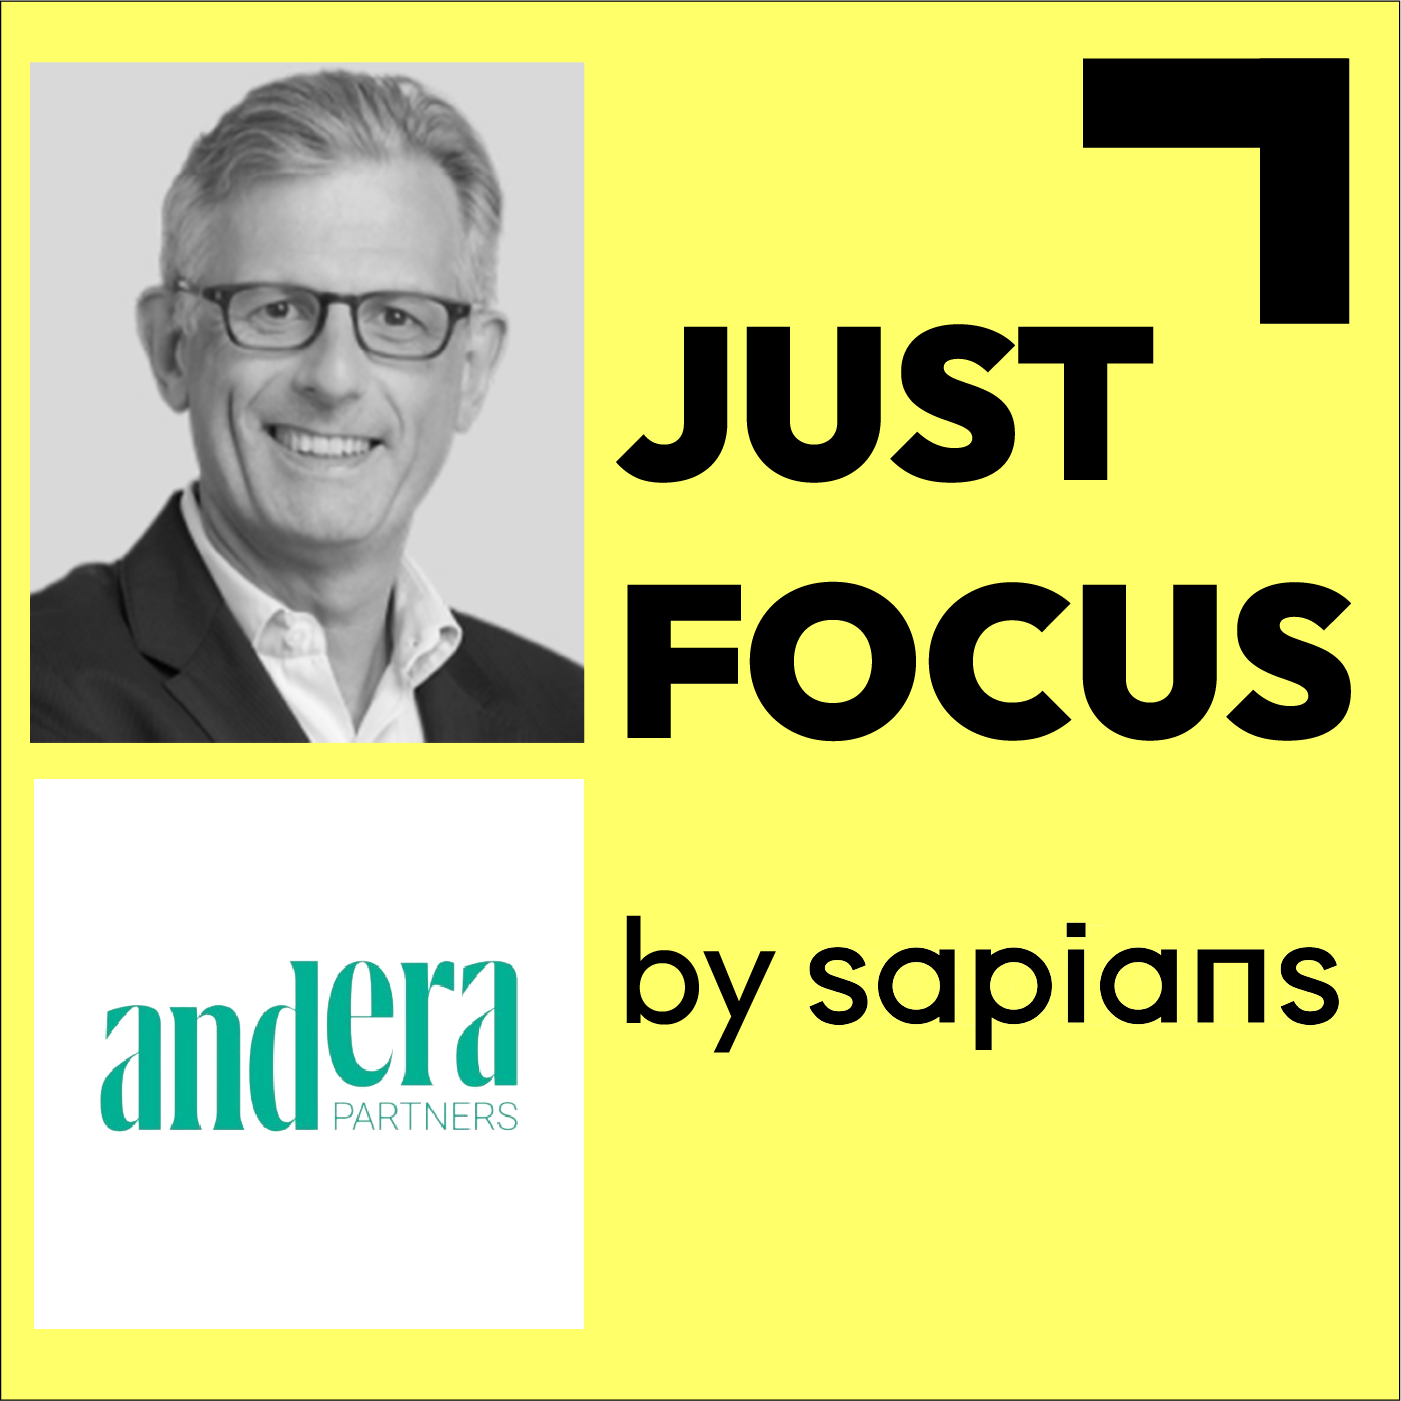 podcast-anderaa-partners-stephane-bergez-just-focus-sapians